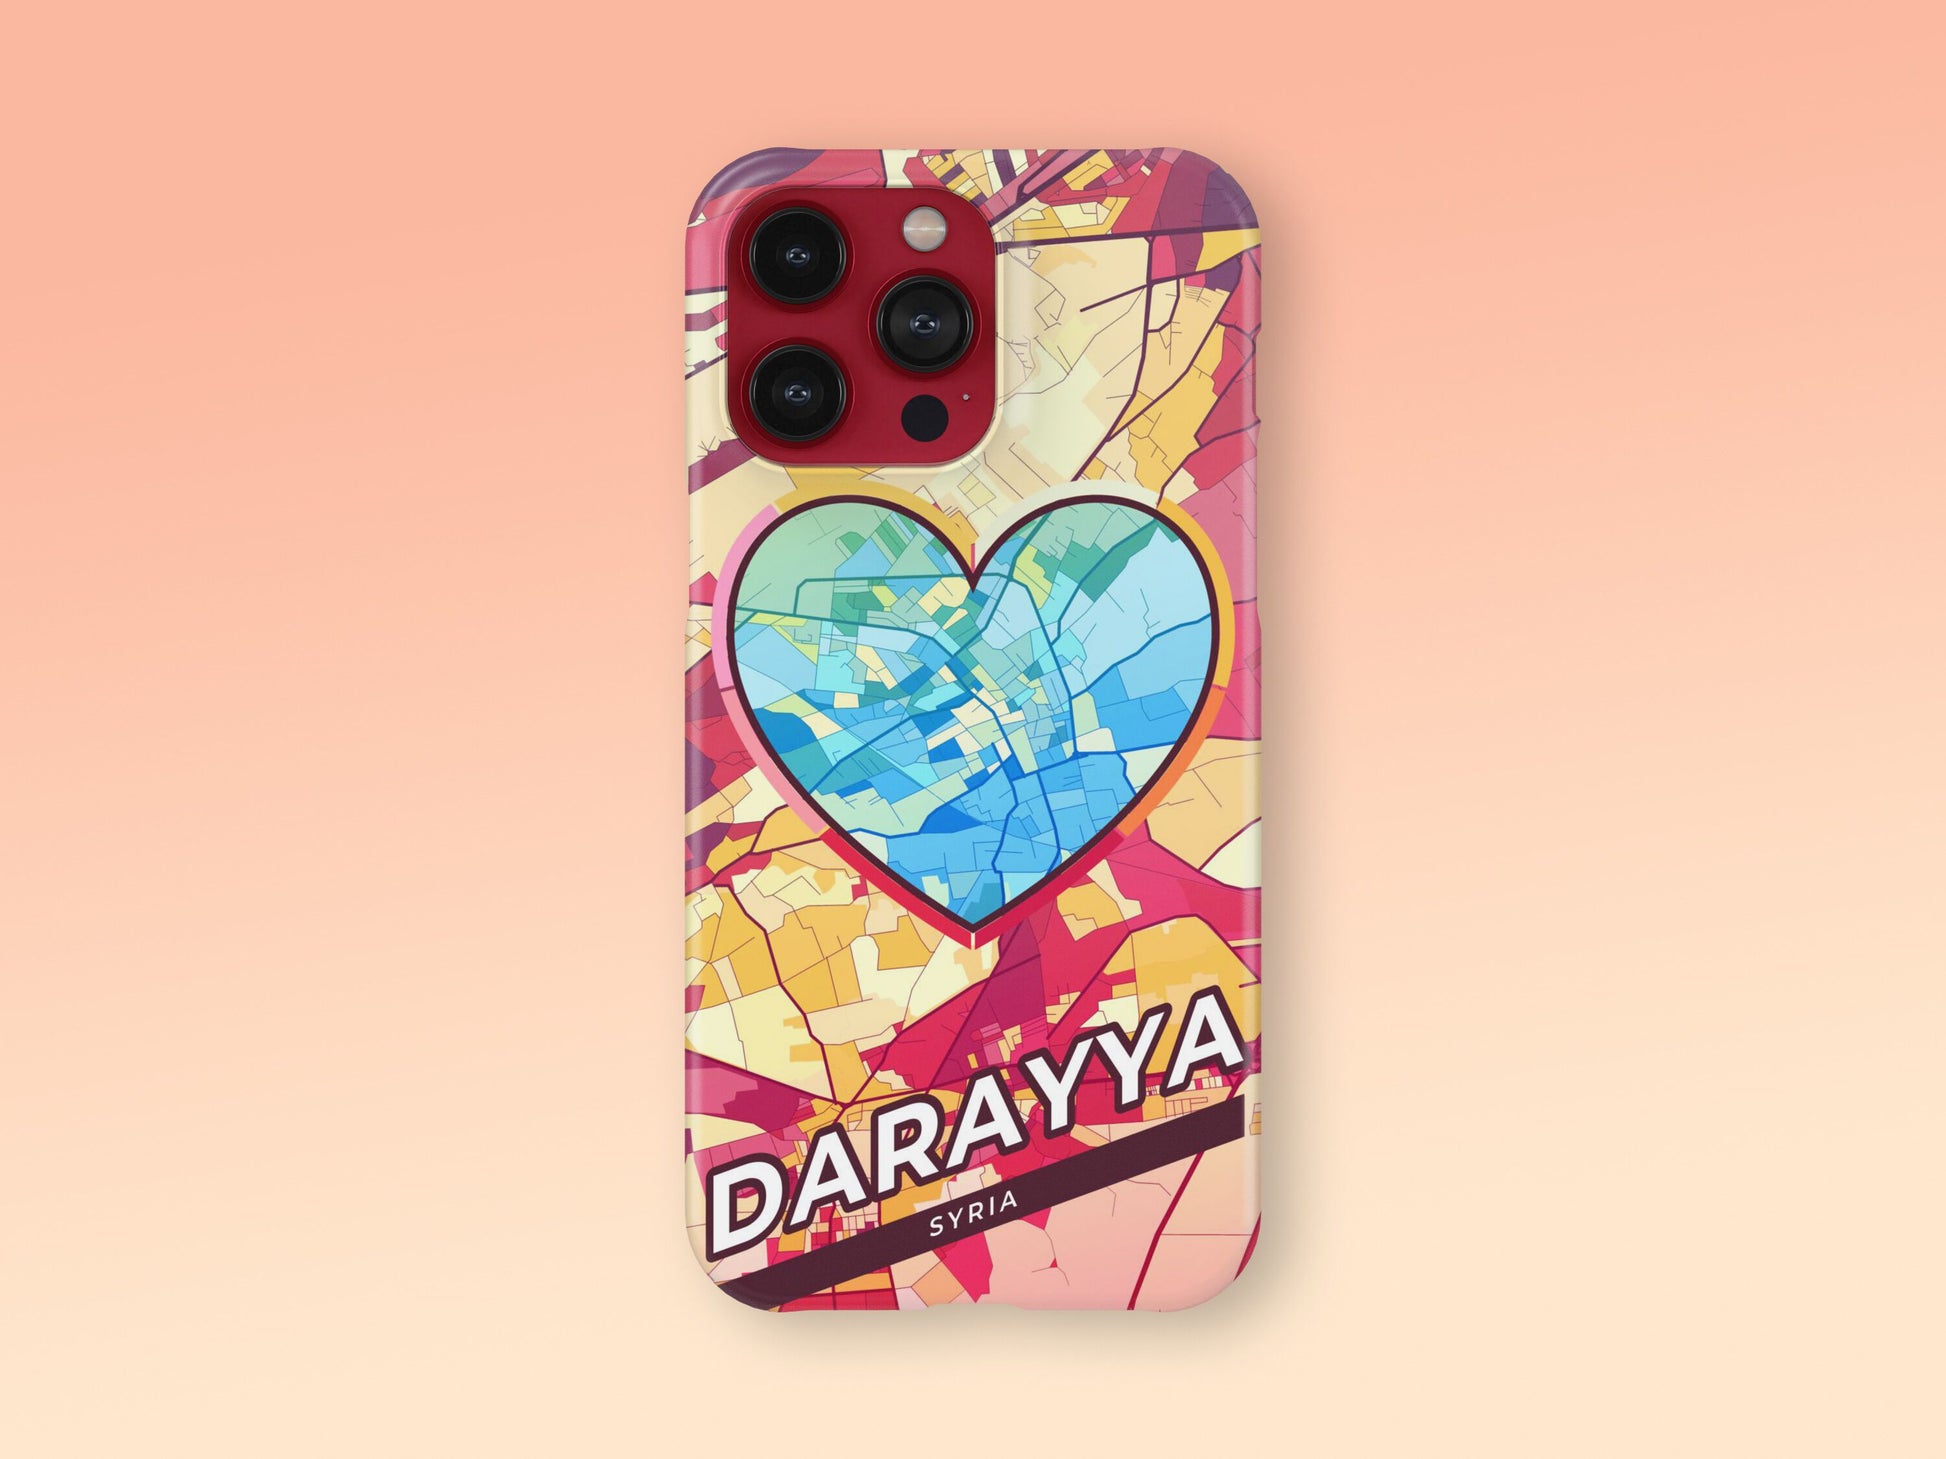 Darayya Syria slim phone case with colorful icon. Birthday, wedding or housewarming gift. Couple match cases. 2